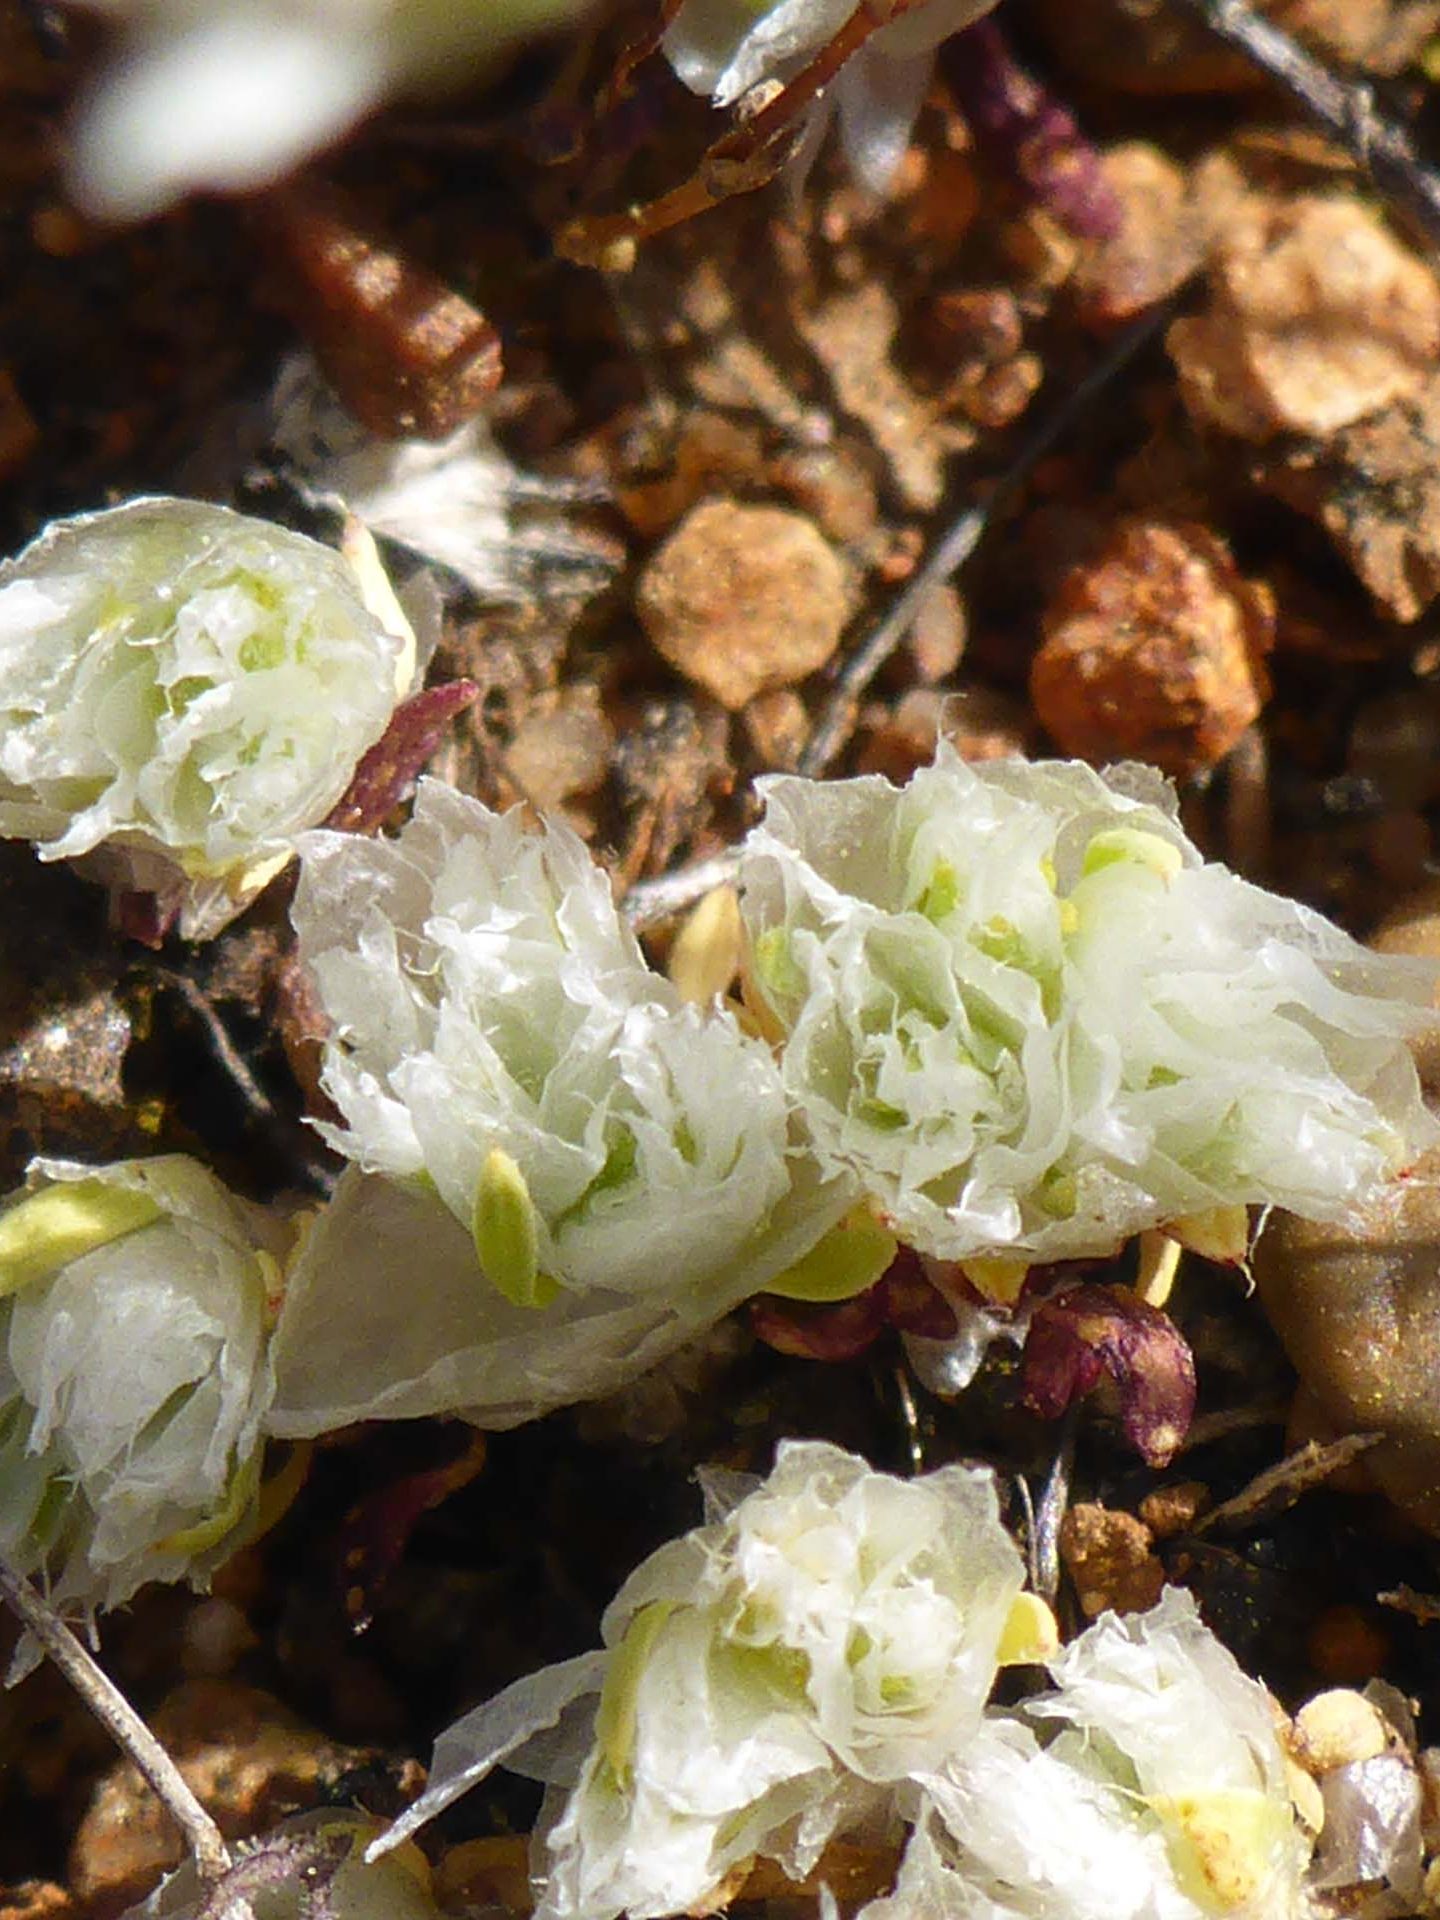 Ahart's paronychia close-up. D. Burk.